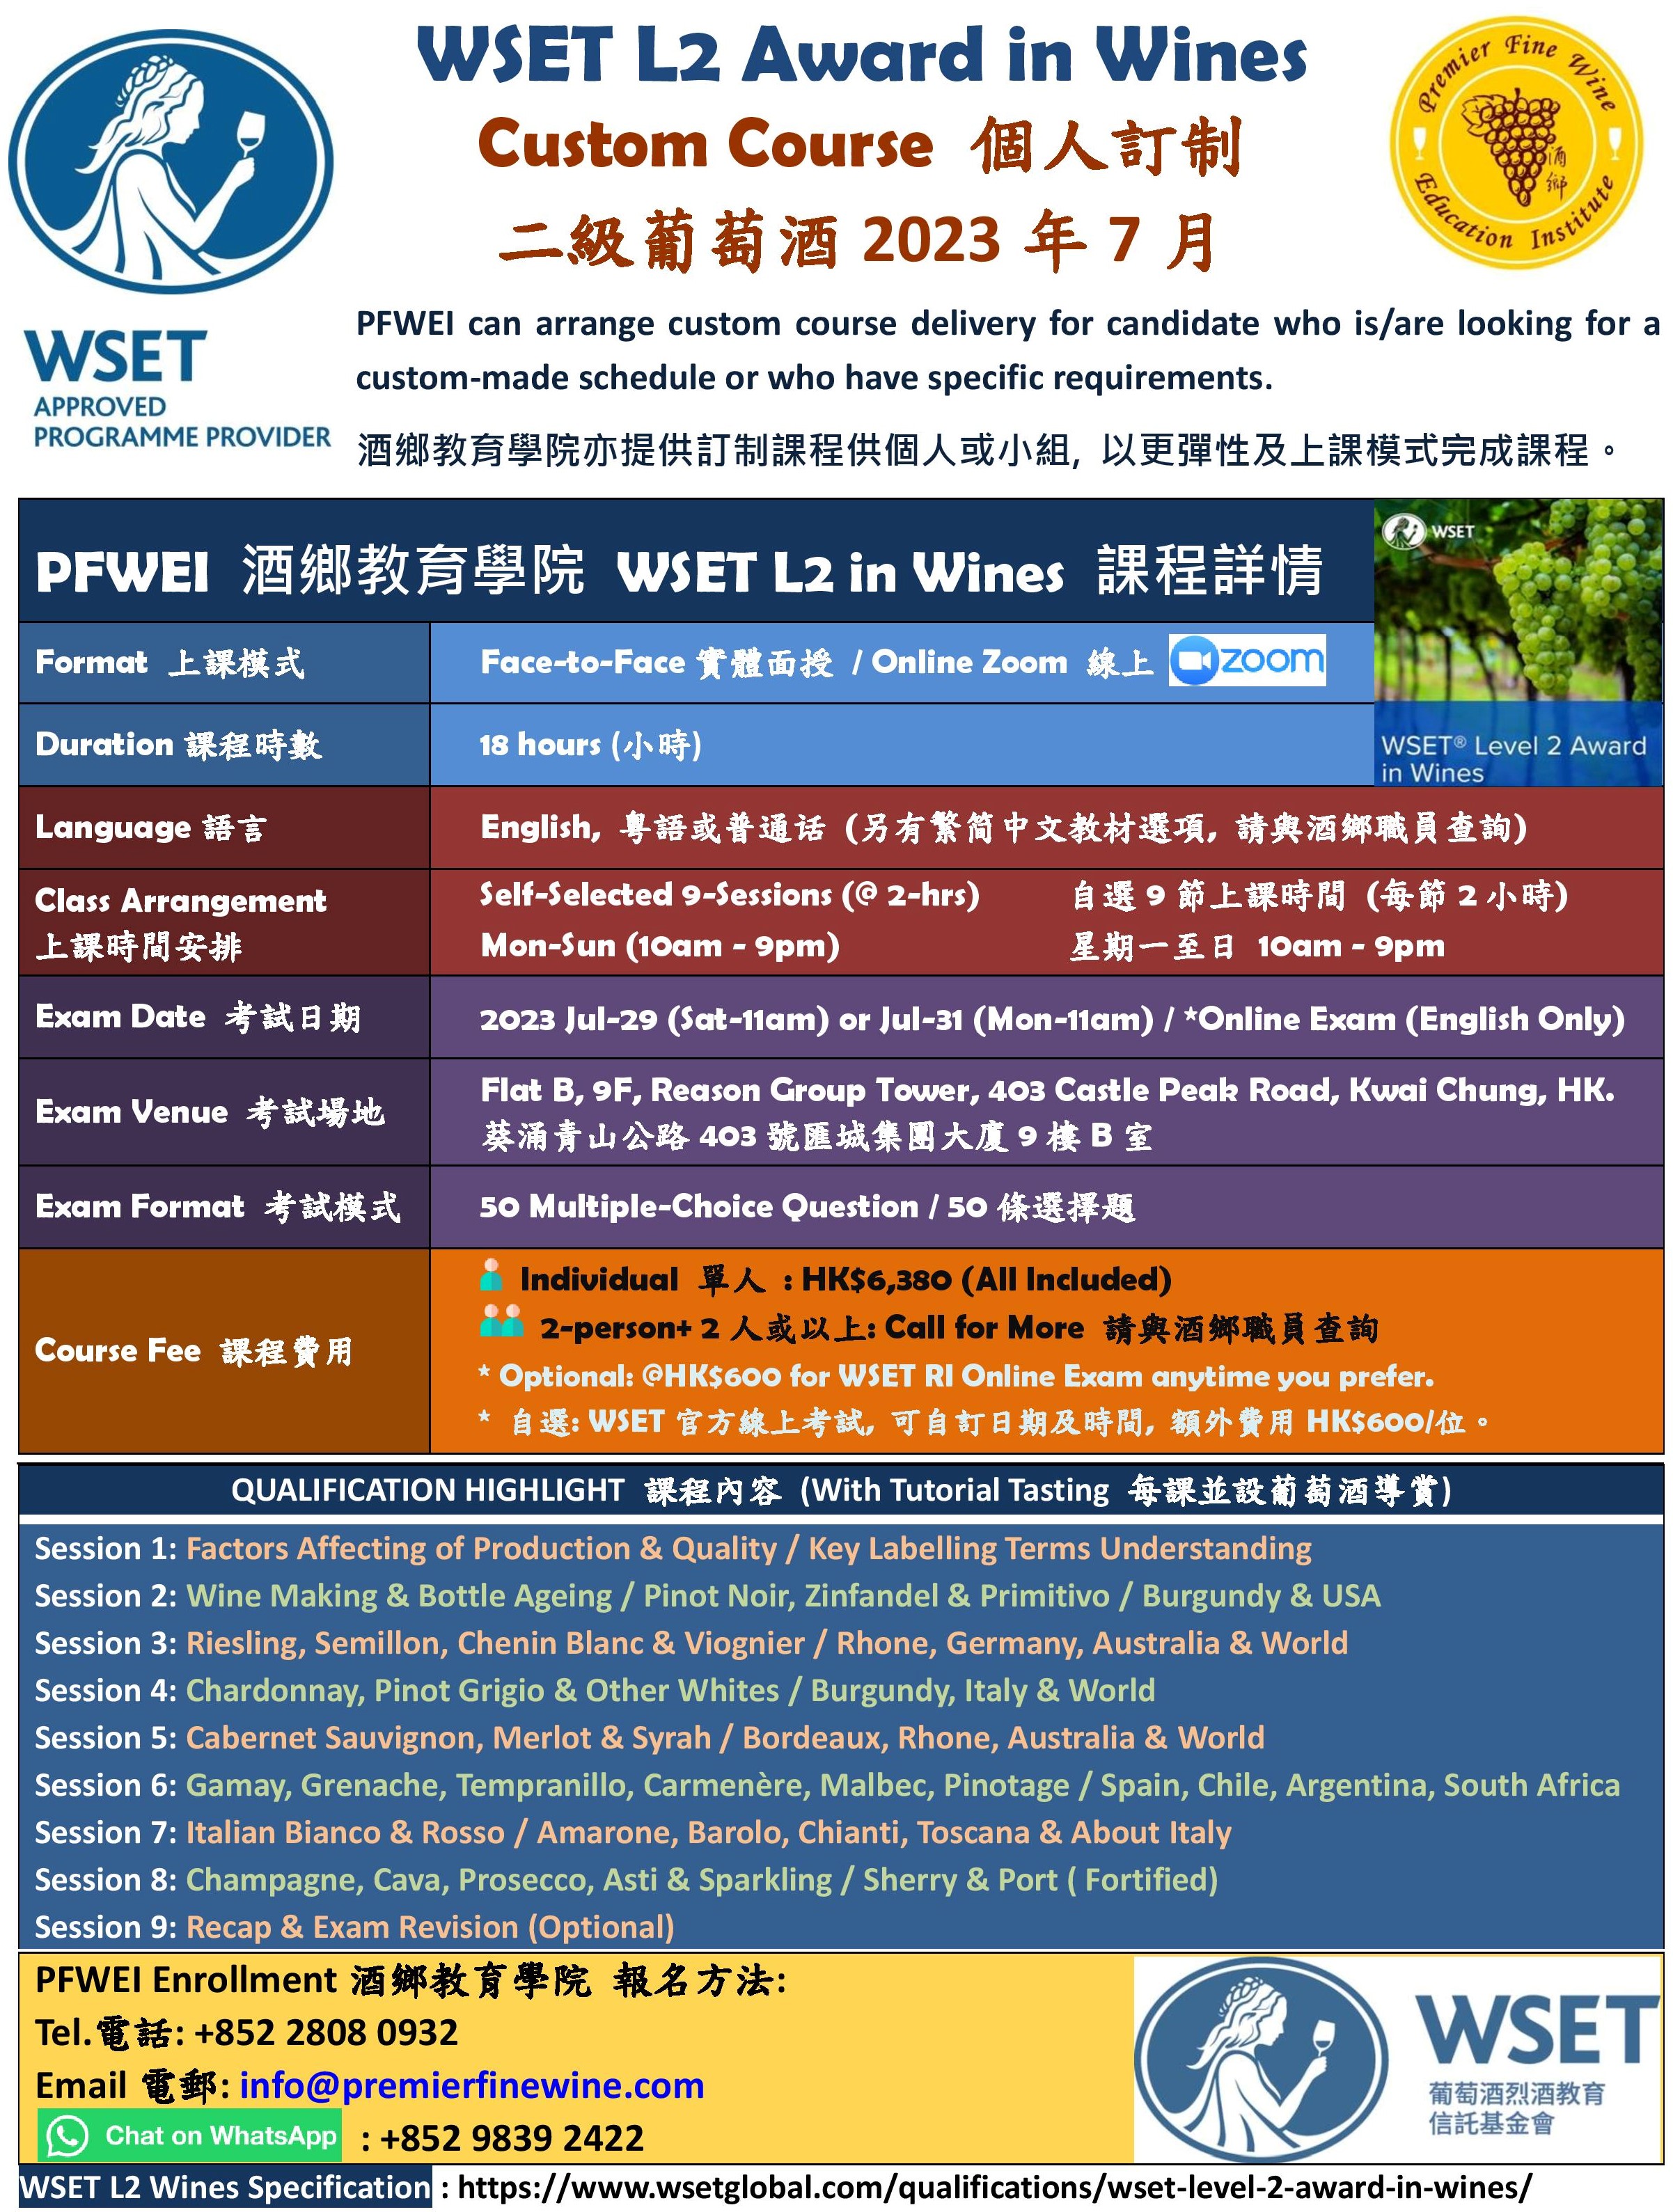 WSET Level 2 Award in Wines Custom Course